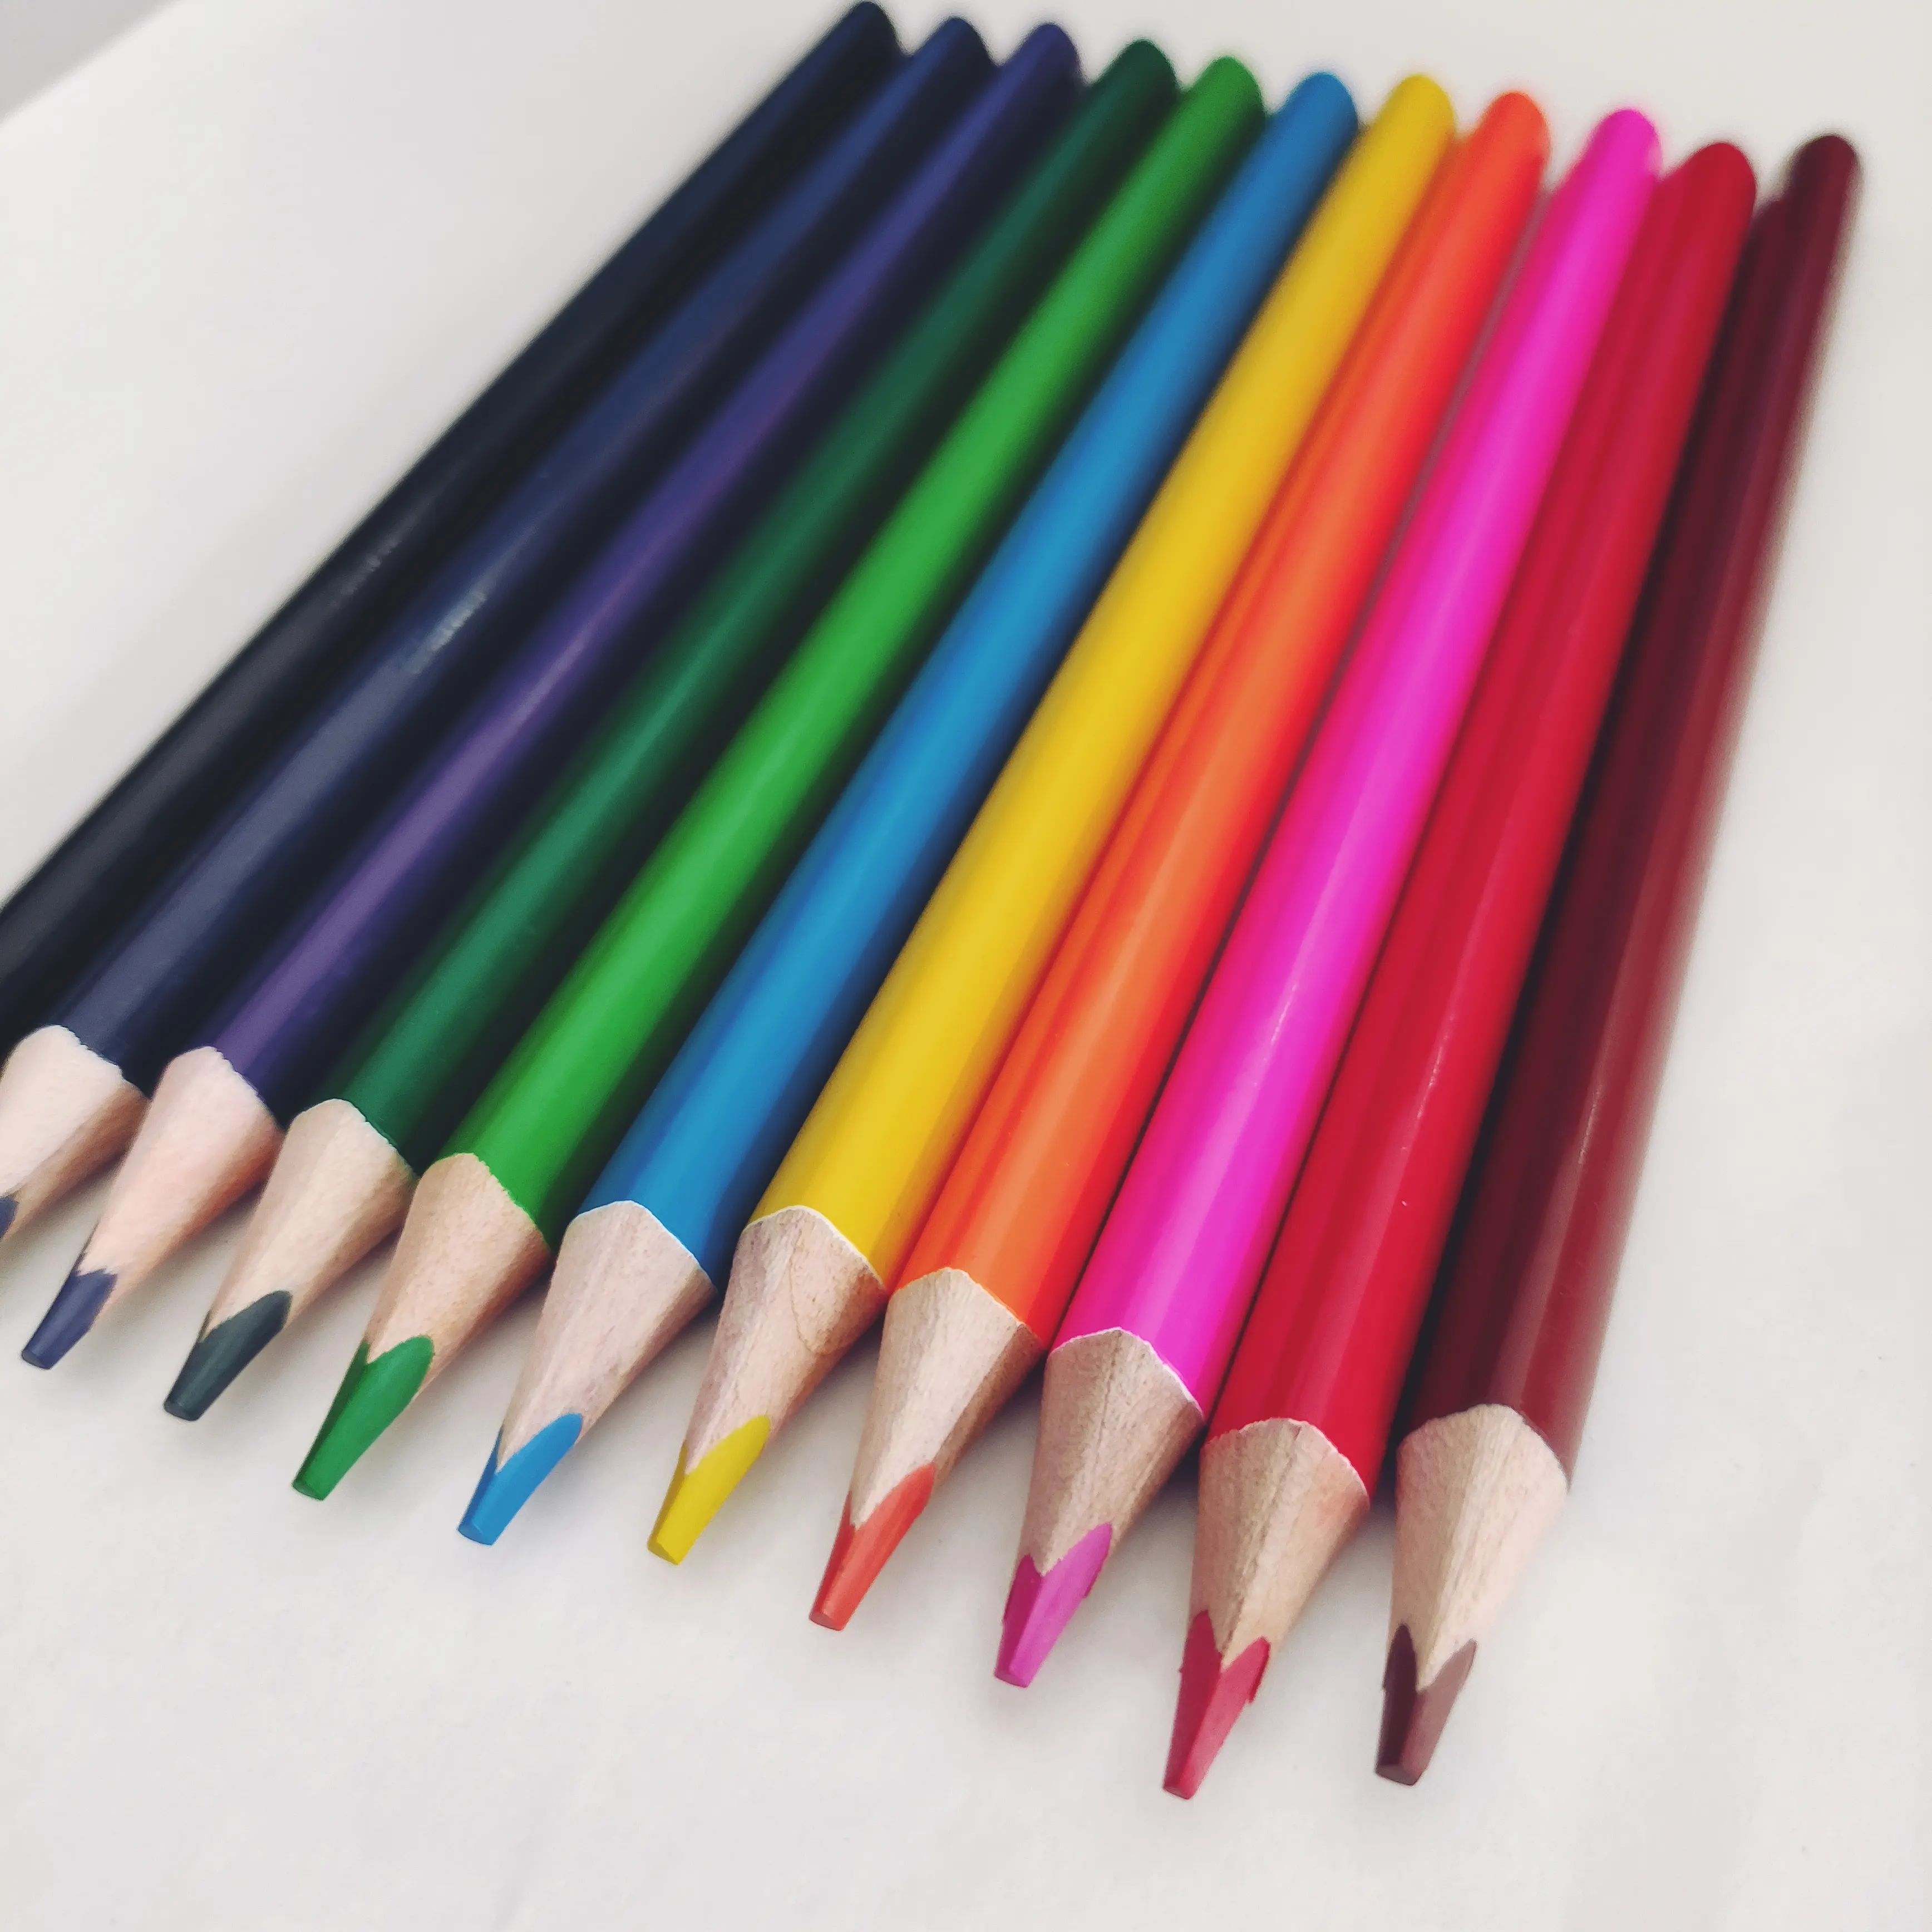 A5 الرصاص أعلى جودة السائبة جامبو اللون قلم رصاص مثلث الألوان مجموعة أقلام رصاص في صندوق ورقي 12 ألوان اللوحة خشب مصنوع حسب الطلب شعار